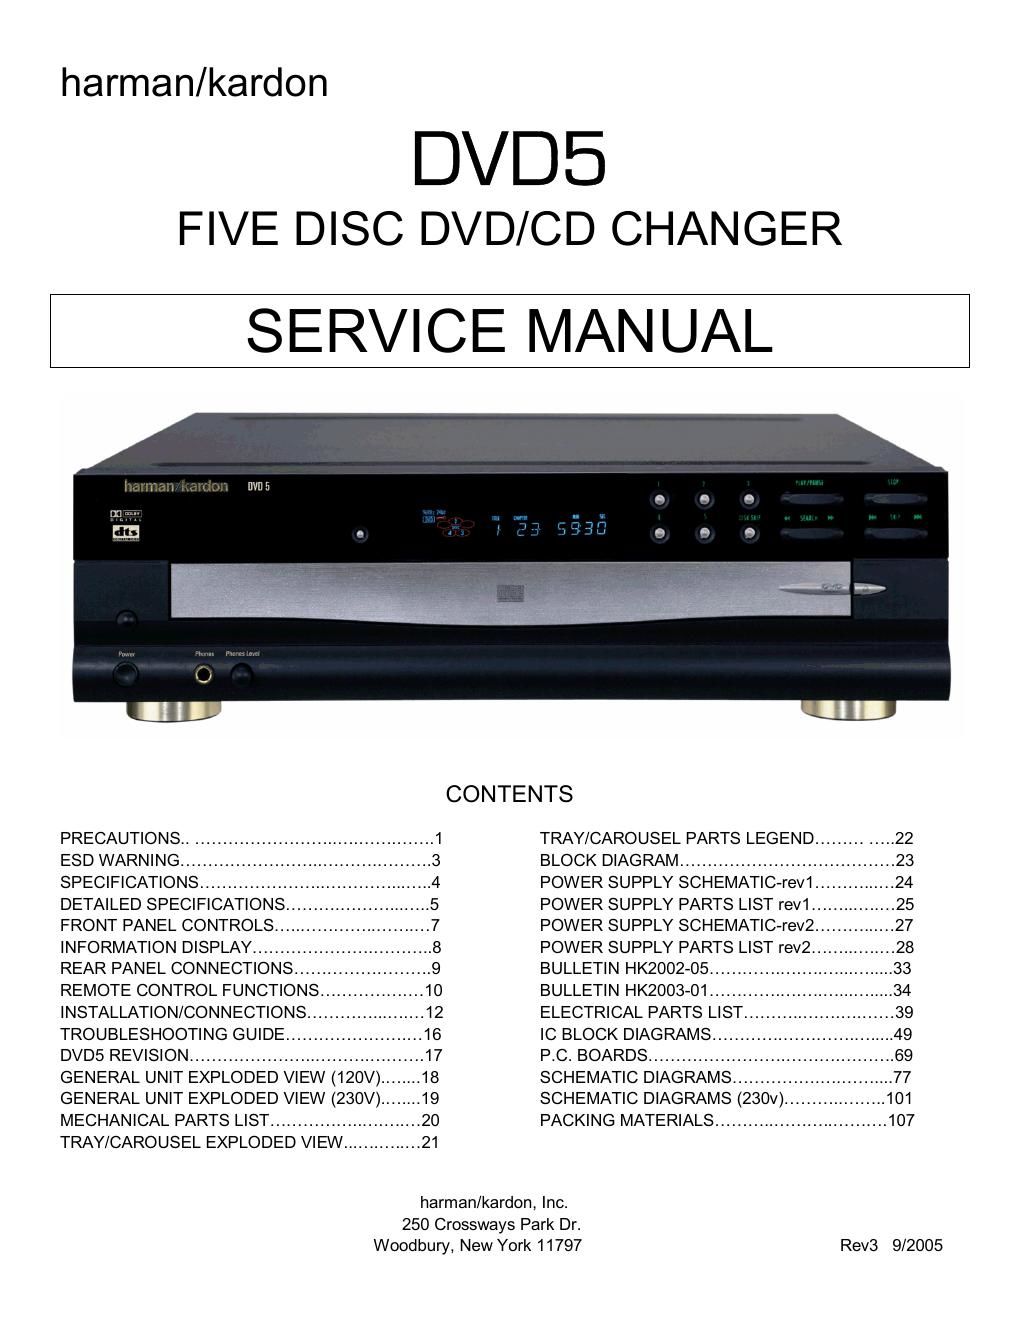 harman kardon dvd 5 service manual